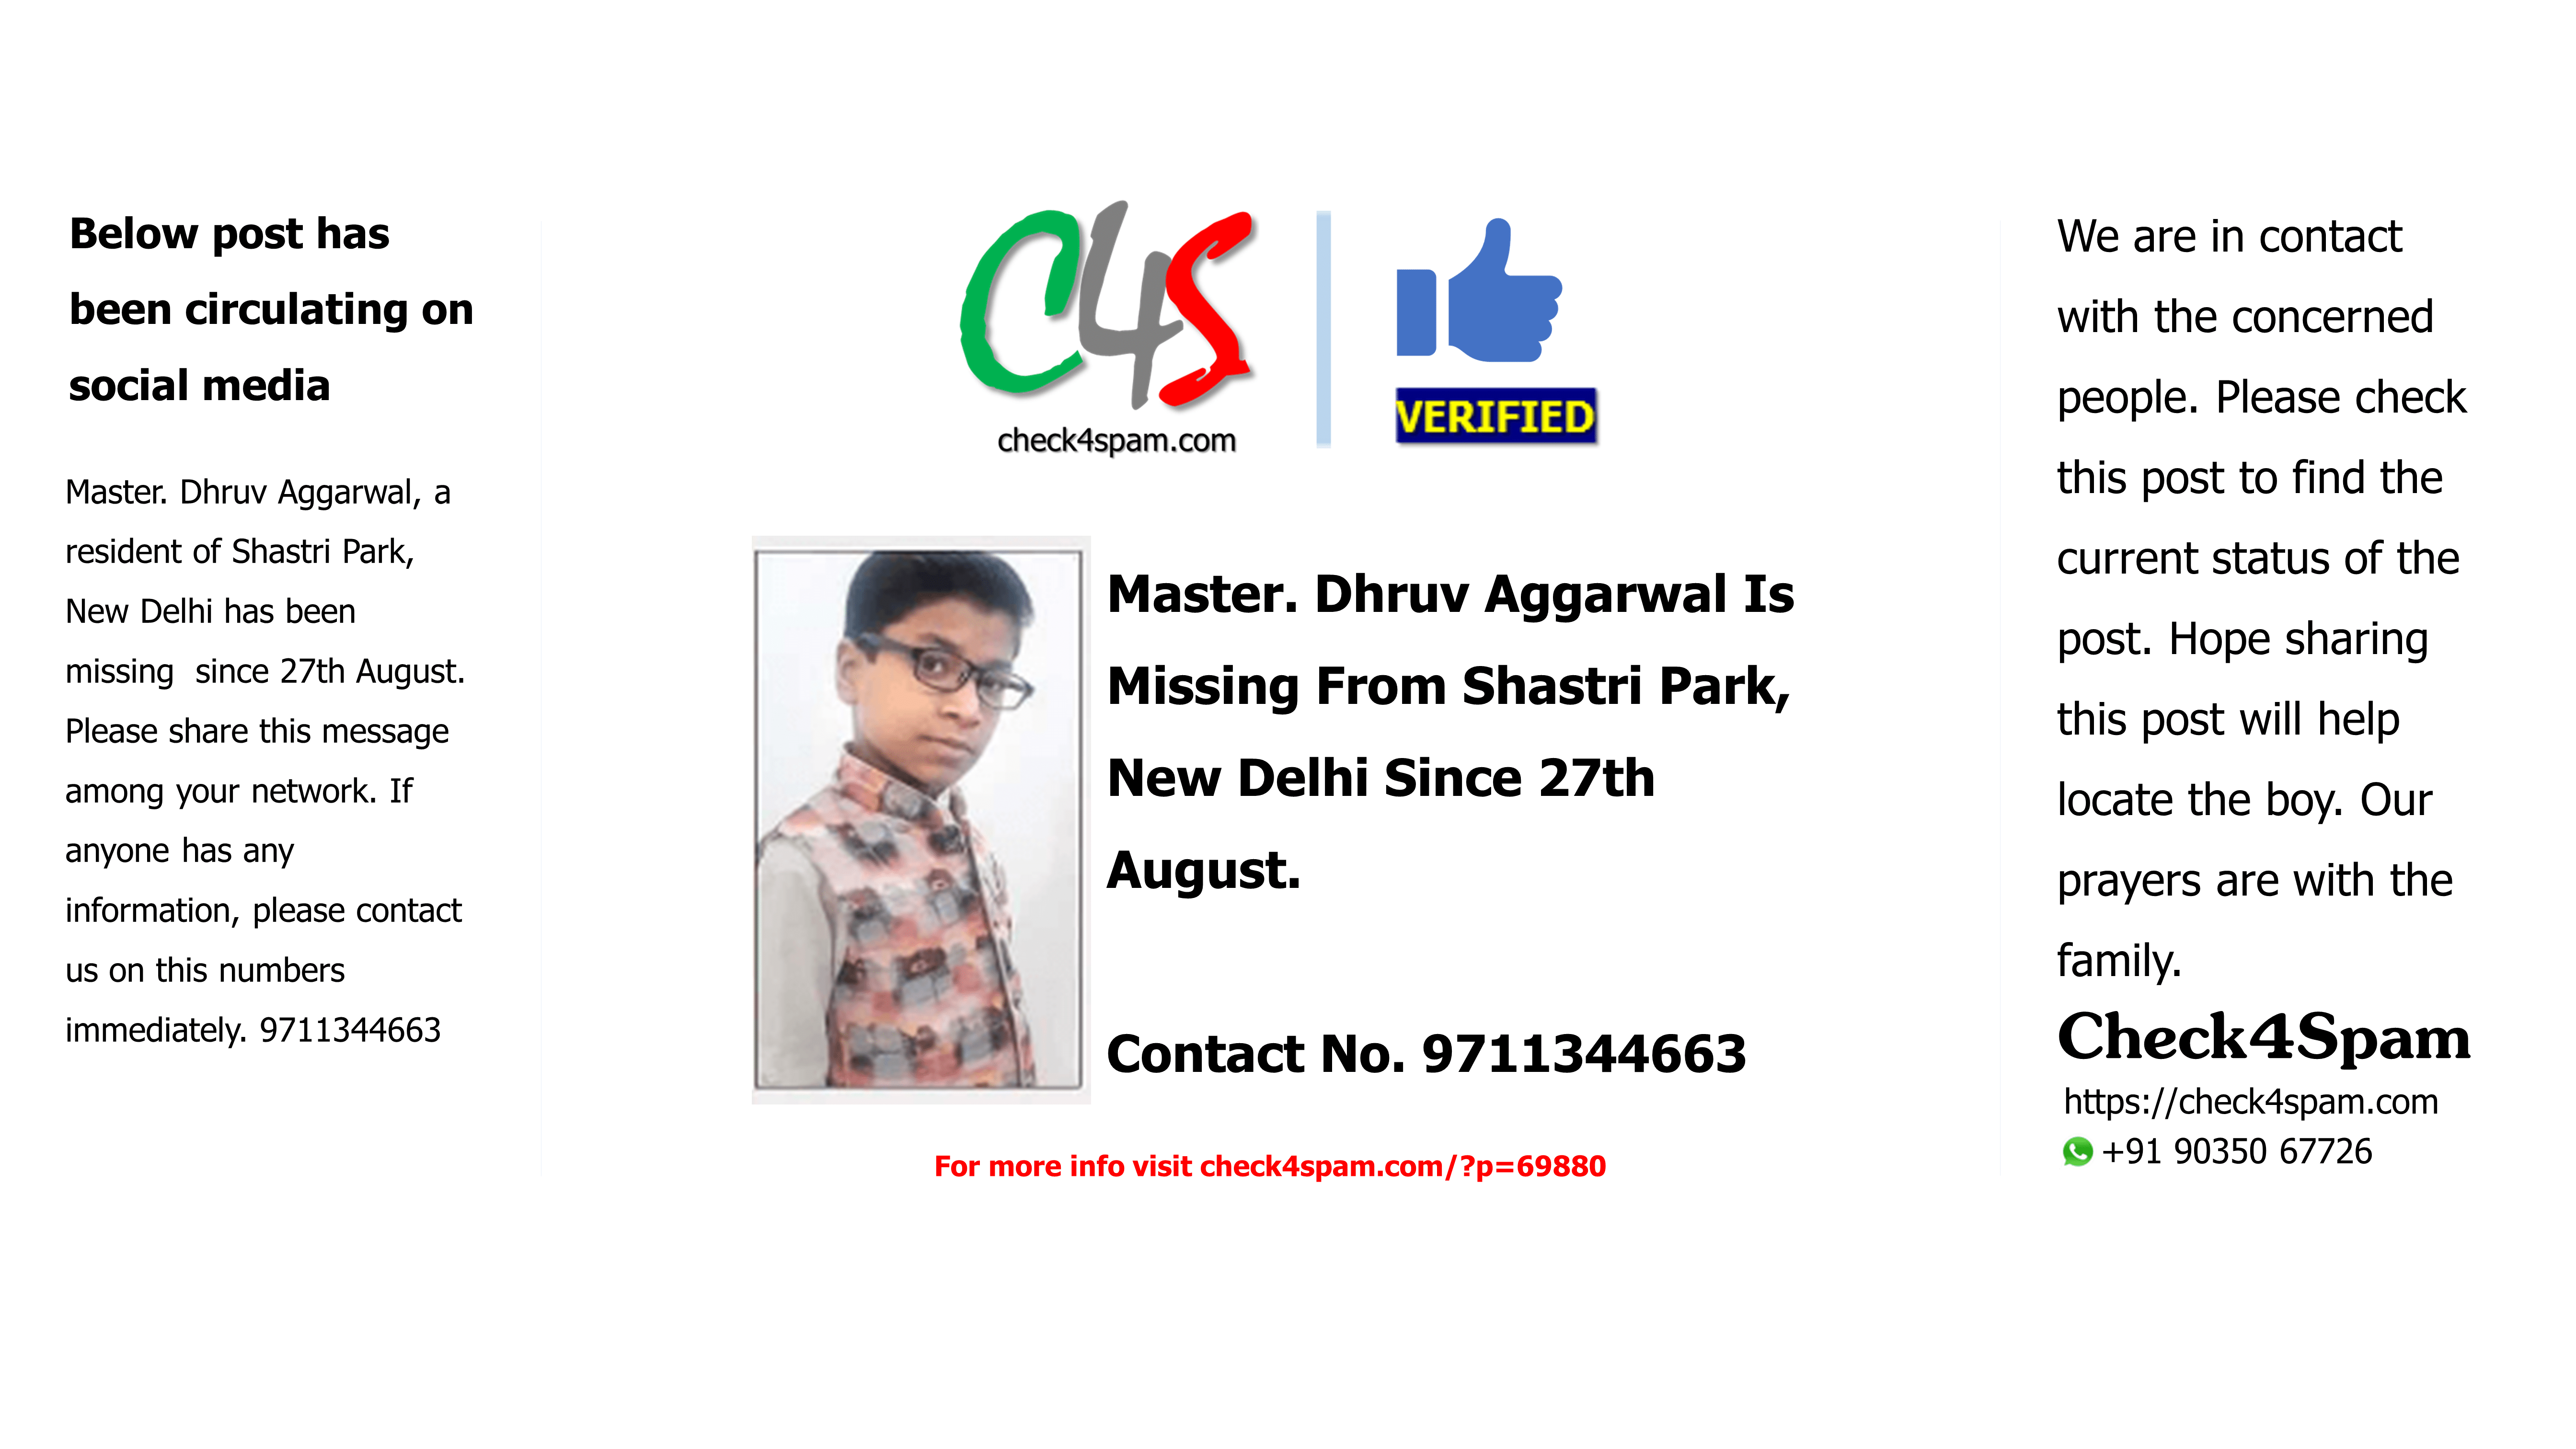 [NOT SPAM] Boy Missing From Shastri Park New Delhi